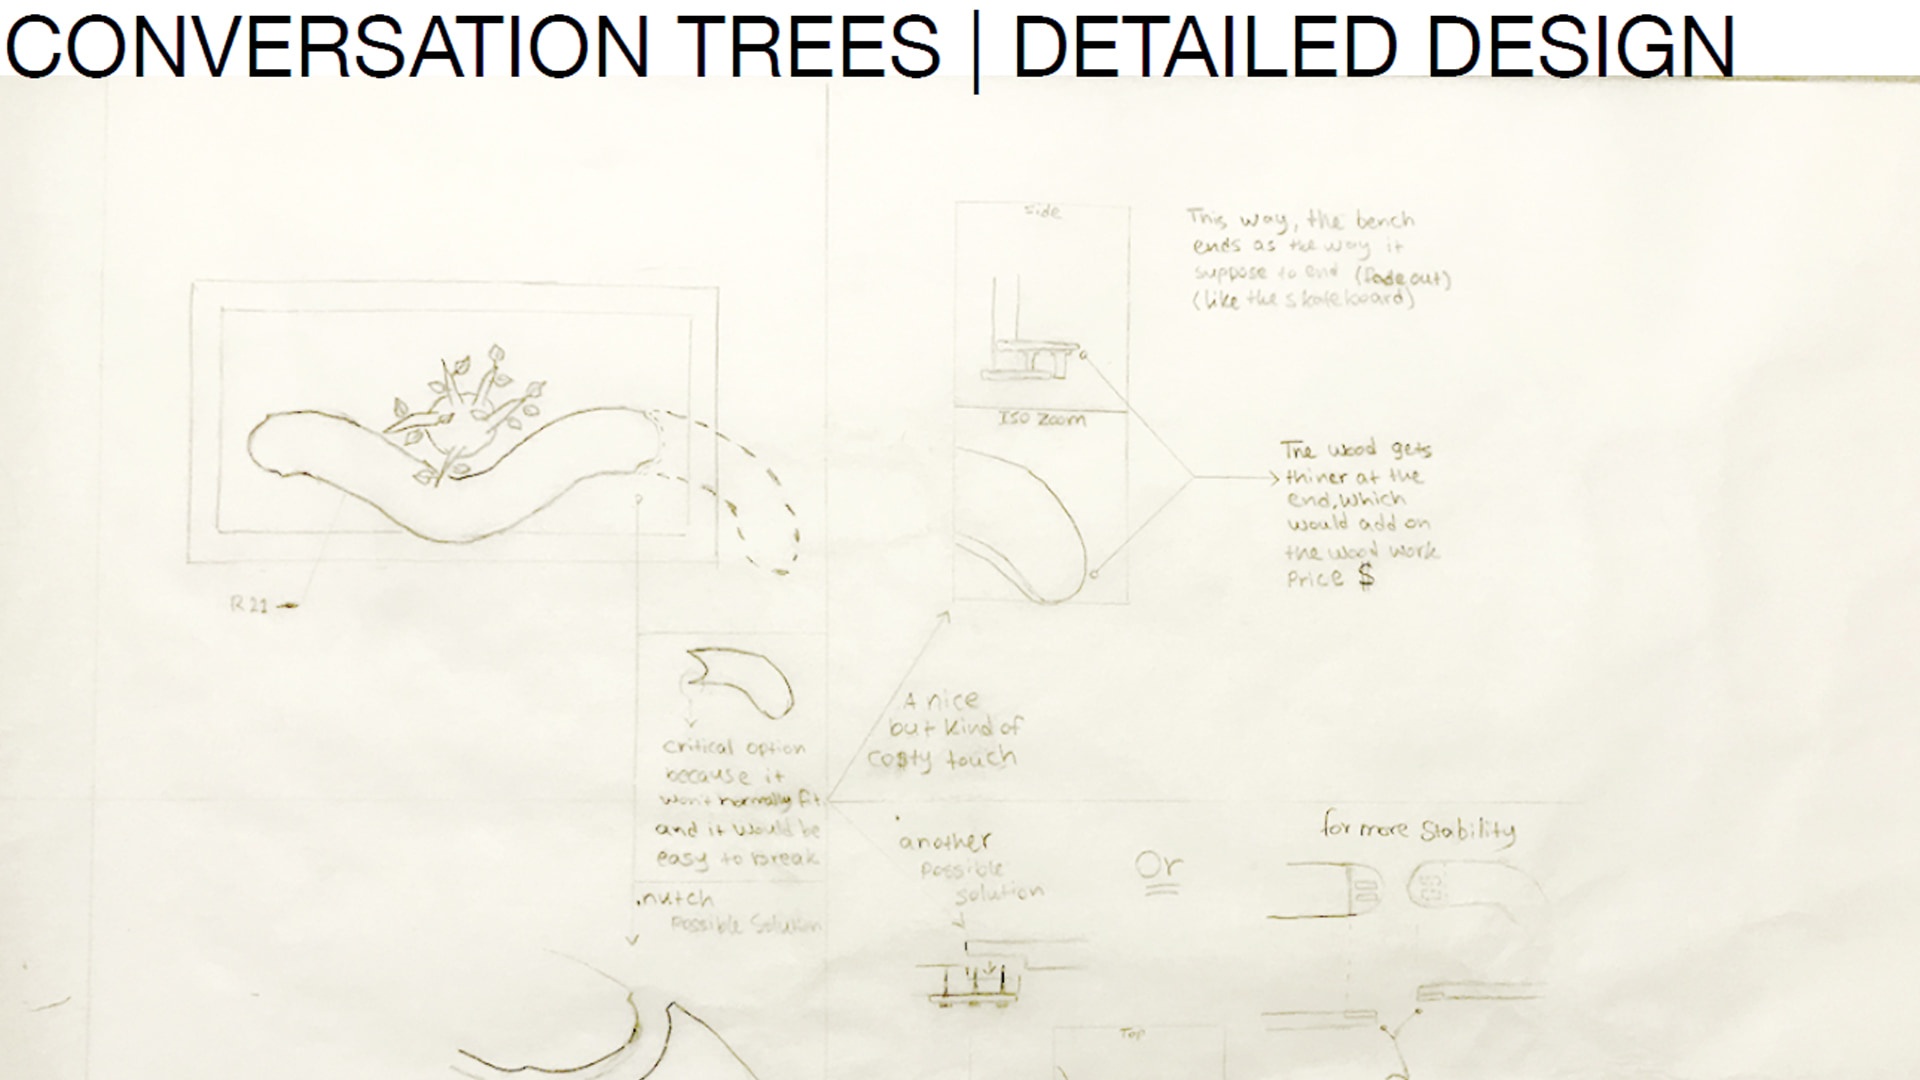 Conversation Trees bench design sketch. 